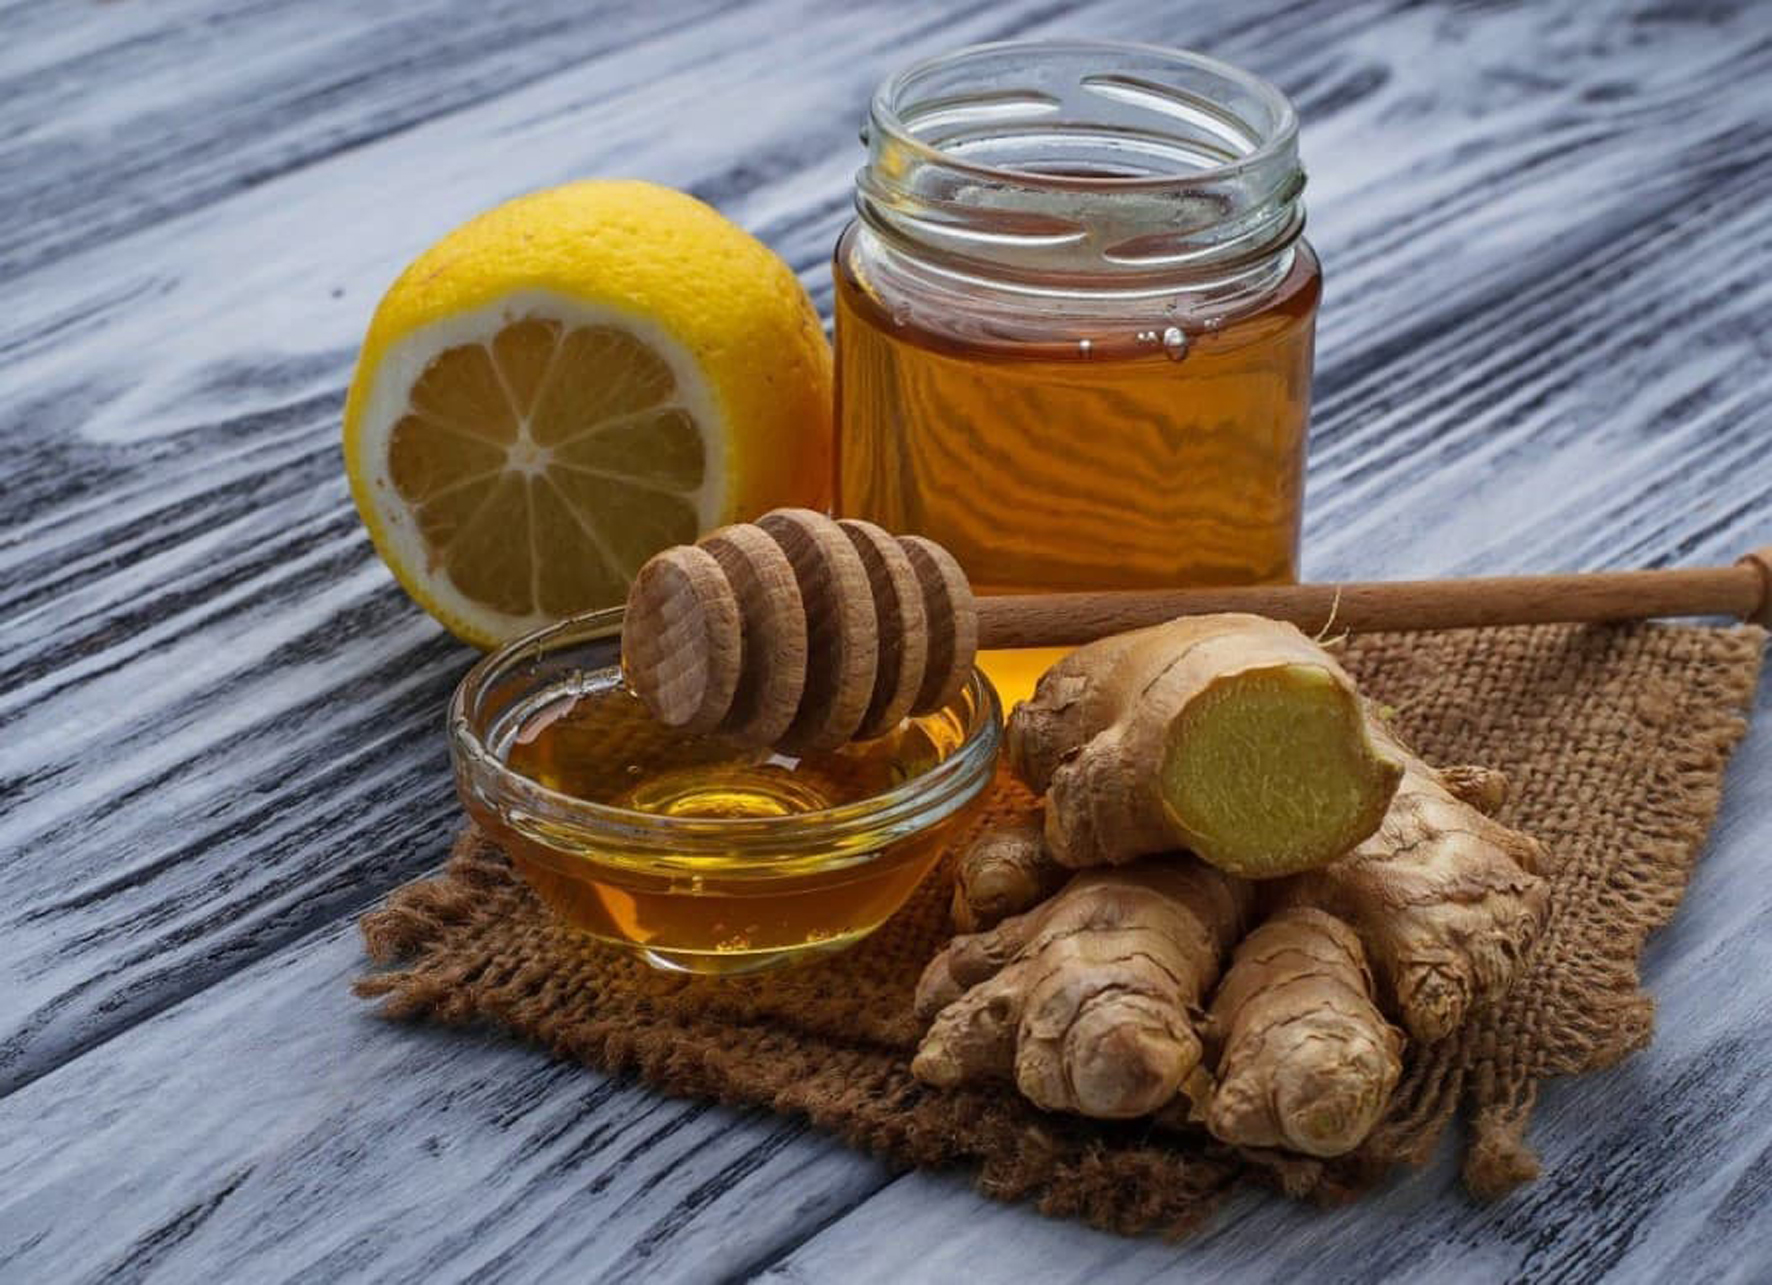 Рецепты средств на основе меда, лимона и имбиря для укрепления иммунитета